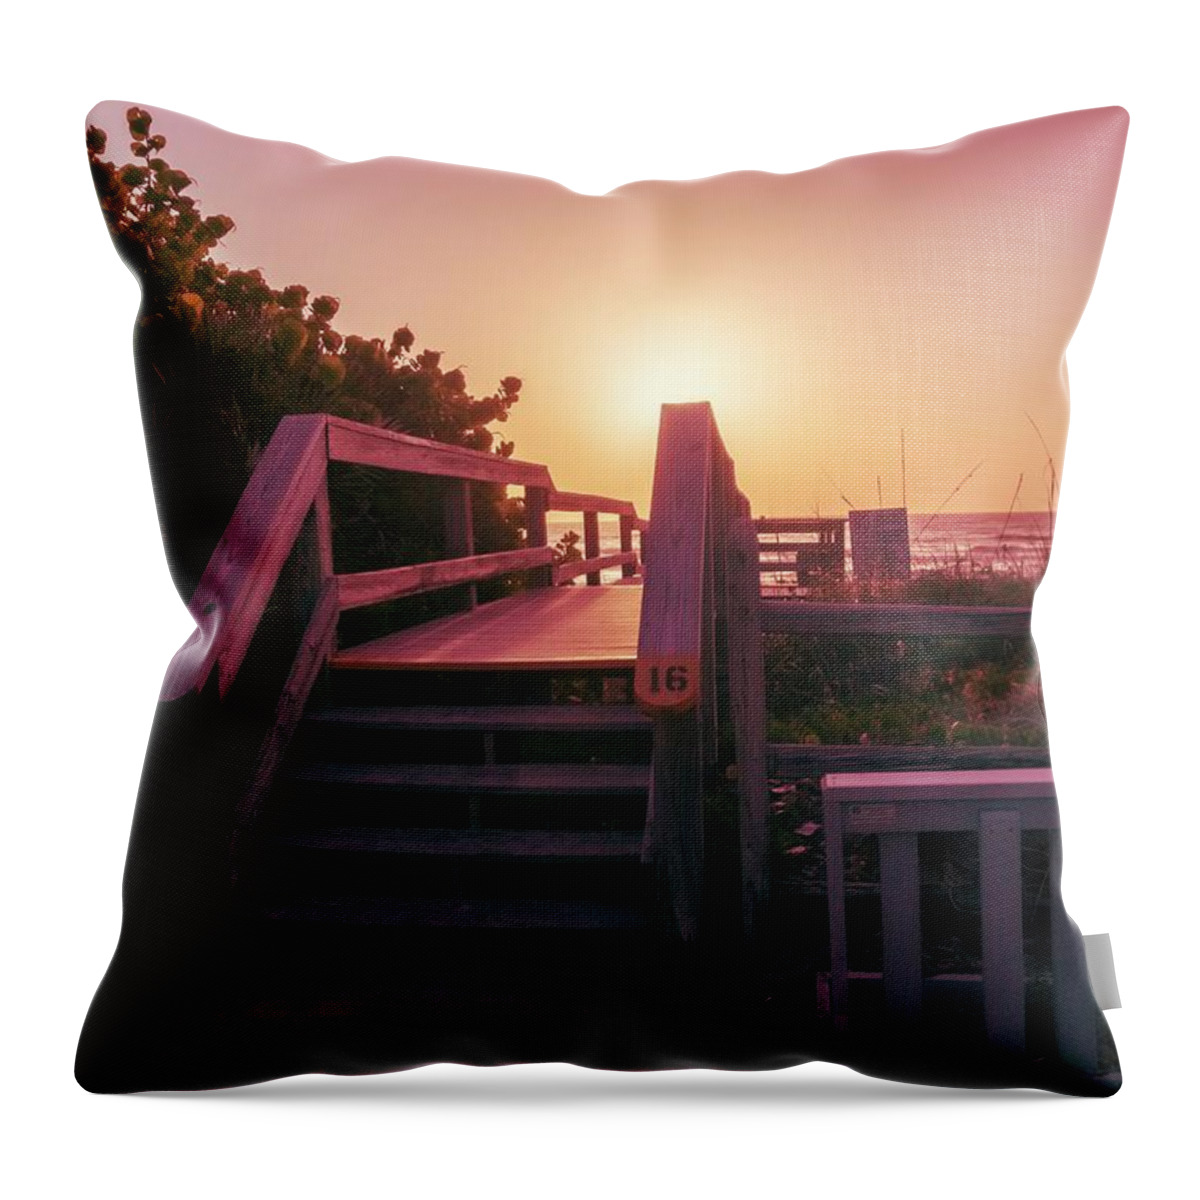 Florida Beaches Throw Pillow featuring the photograph My Atlantic Dream - The Boardwalk. #2 by Carlos Avila